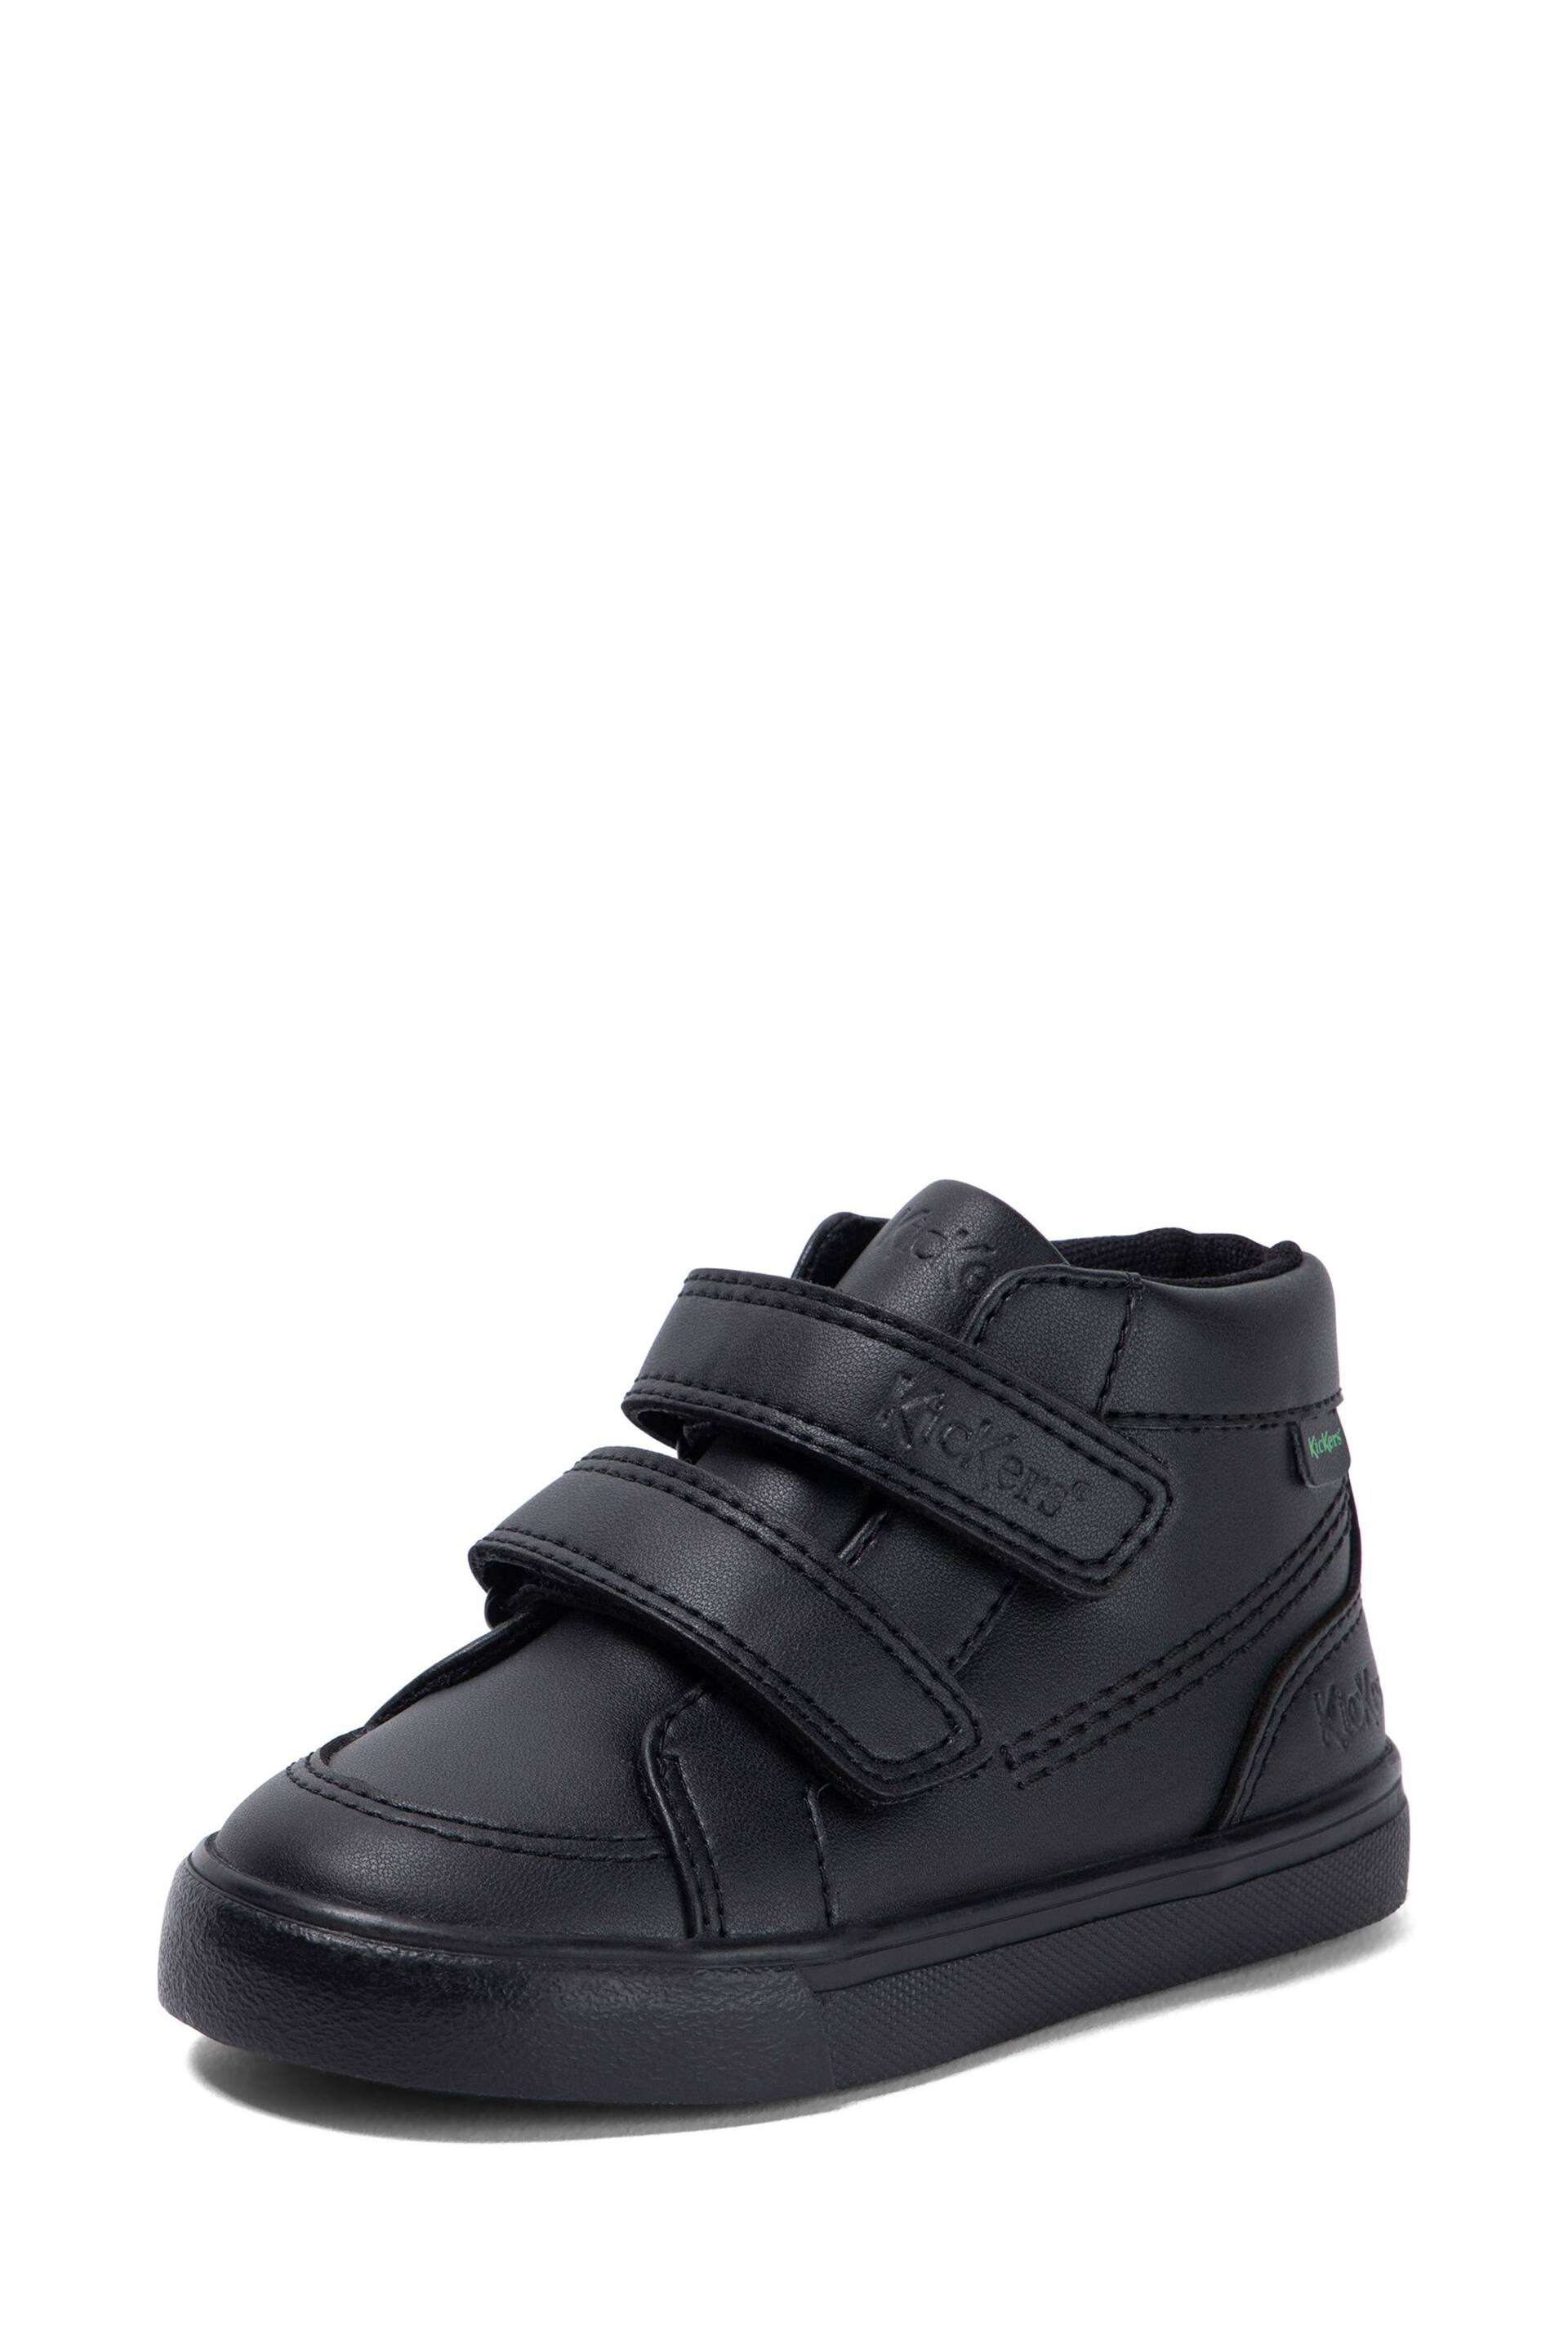 Kickers Infant Unisex Tovni Hi Vel Vegan Black Shoes - Image 2 of 6